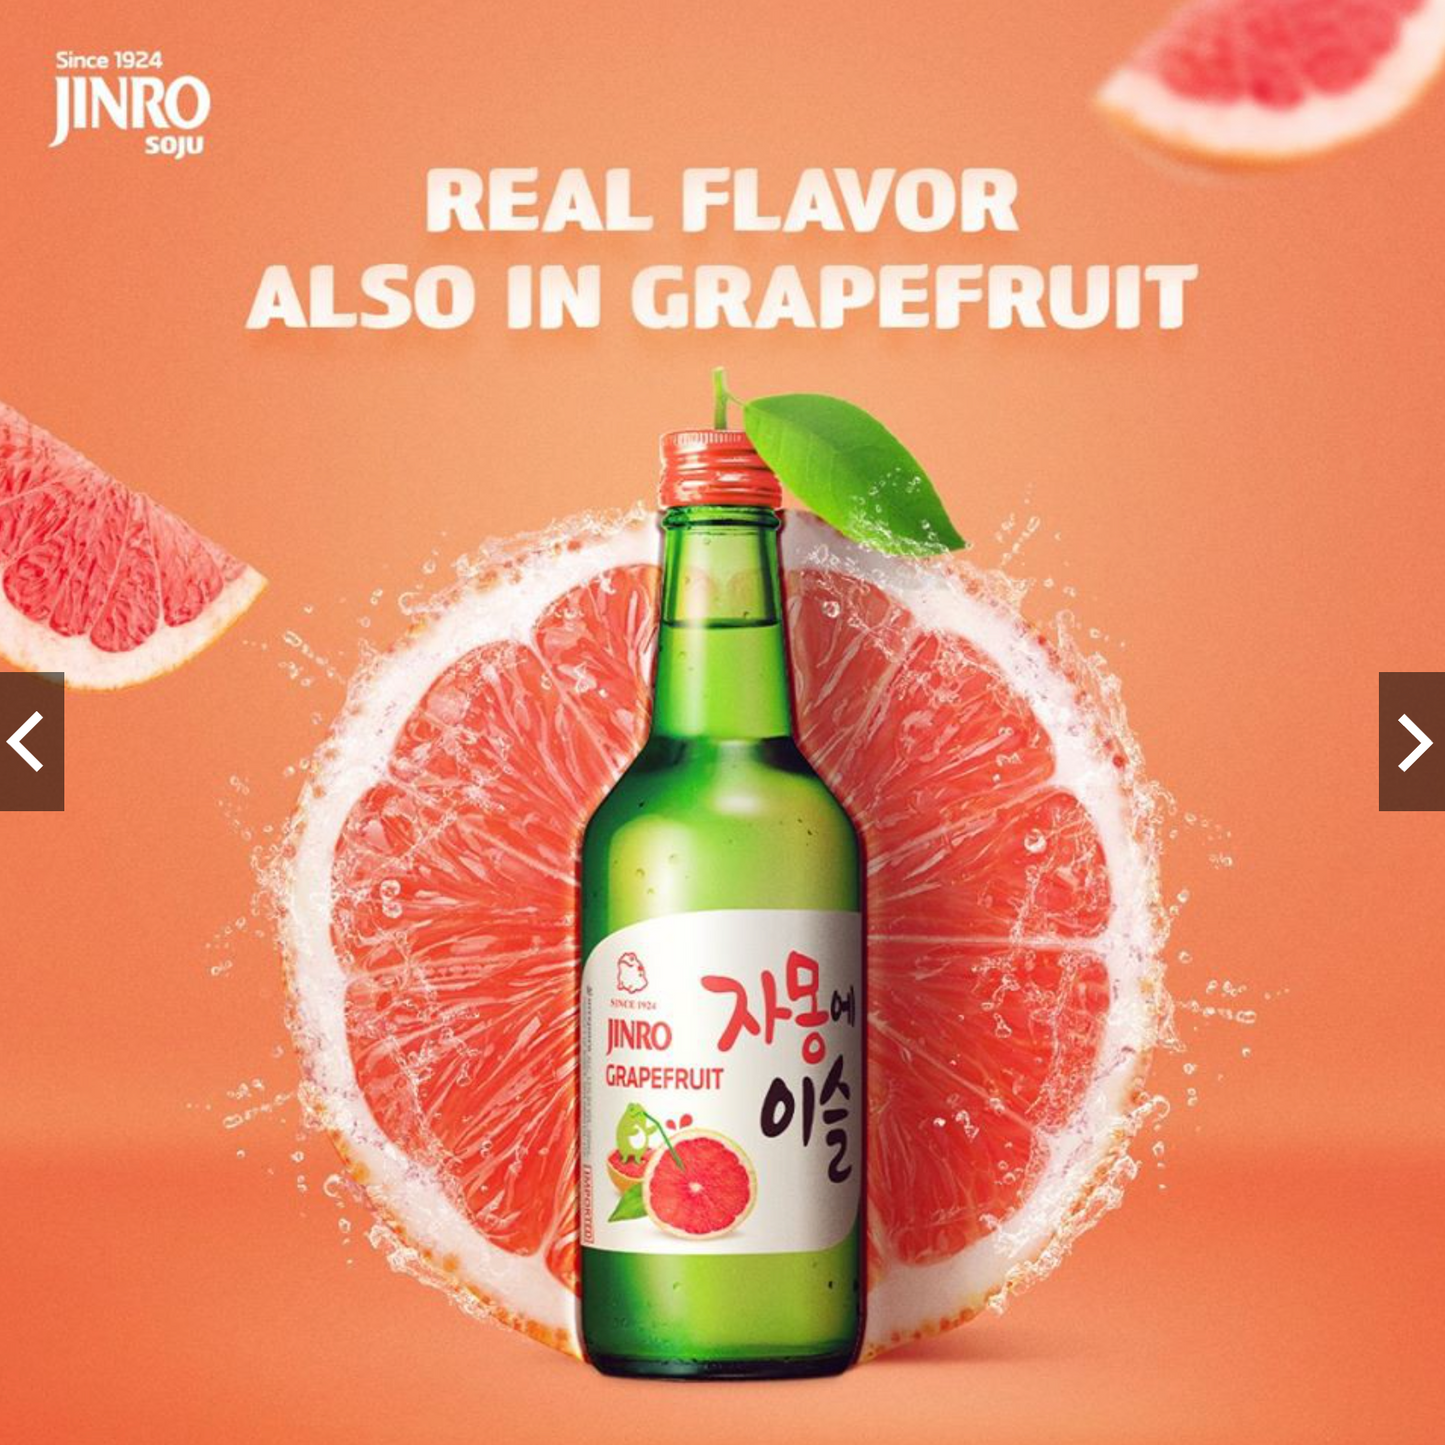 Soju: Jinro Grapefruit